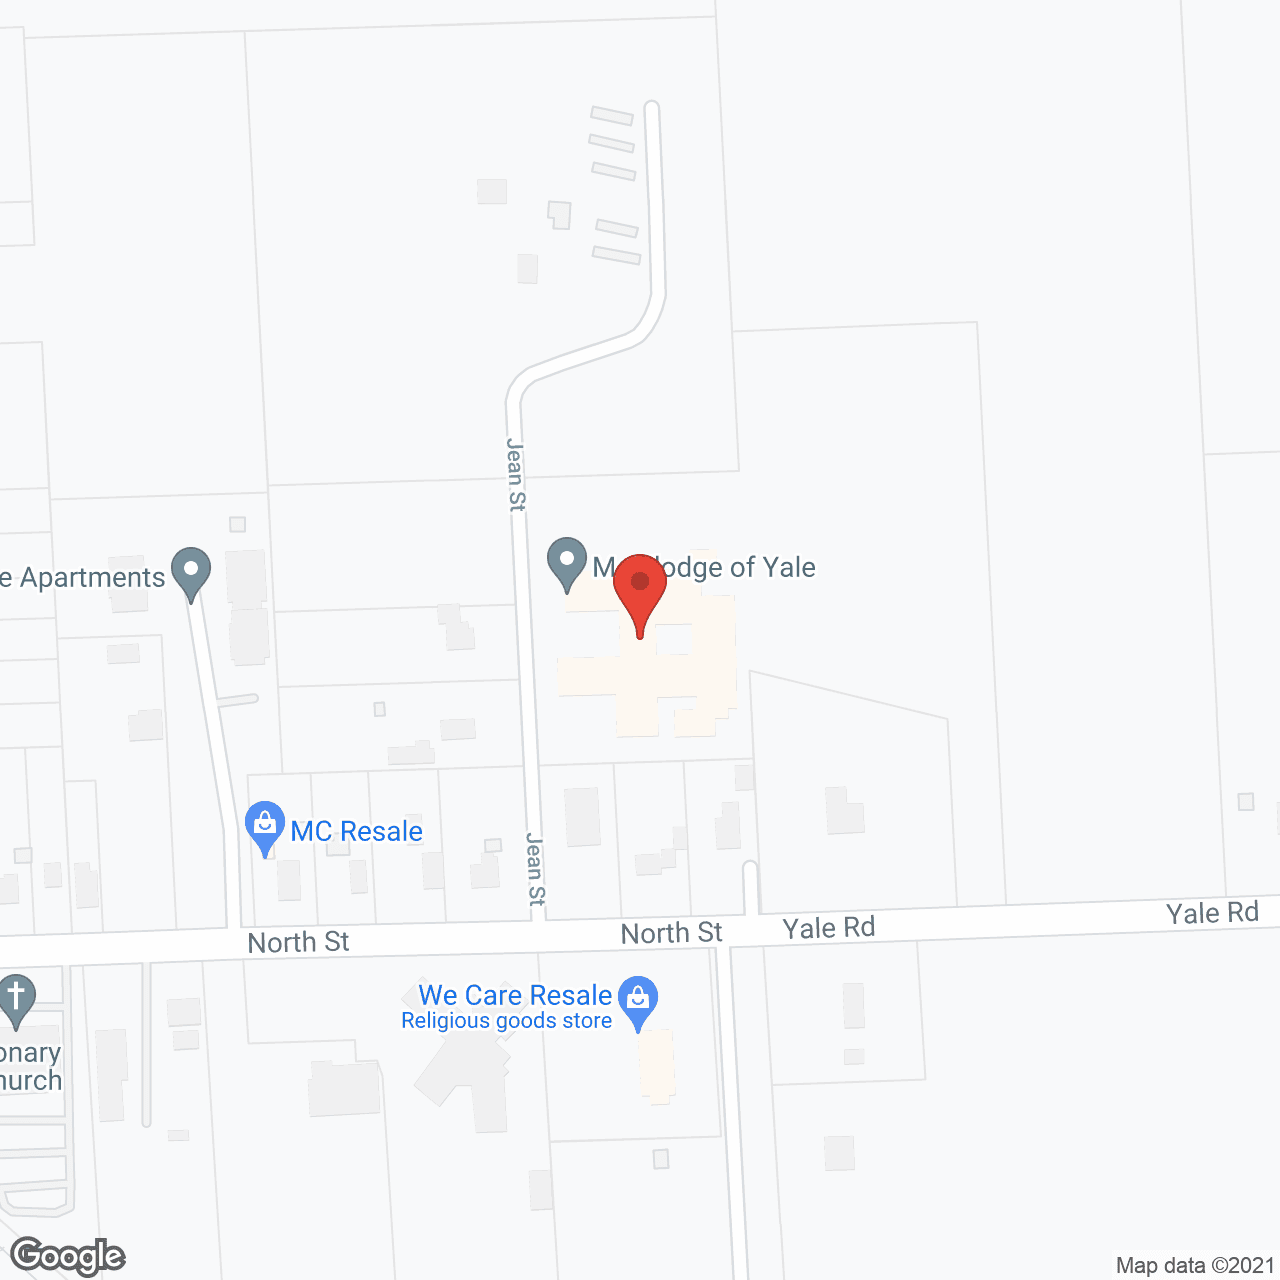 Medilodge of Yale in google map